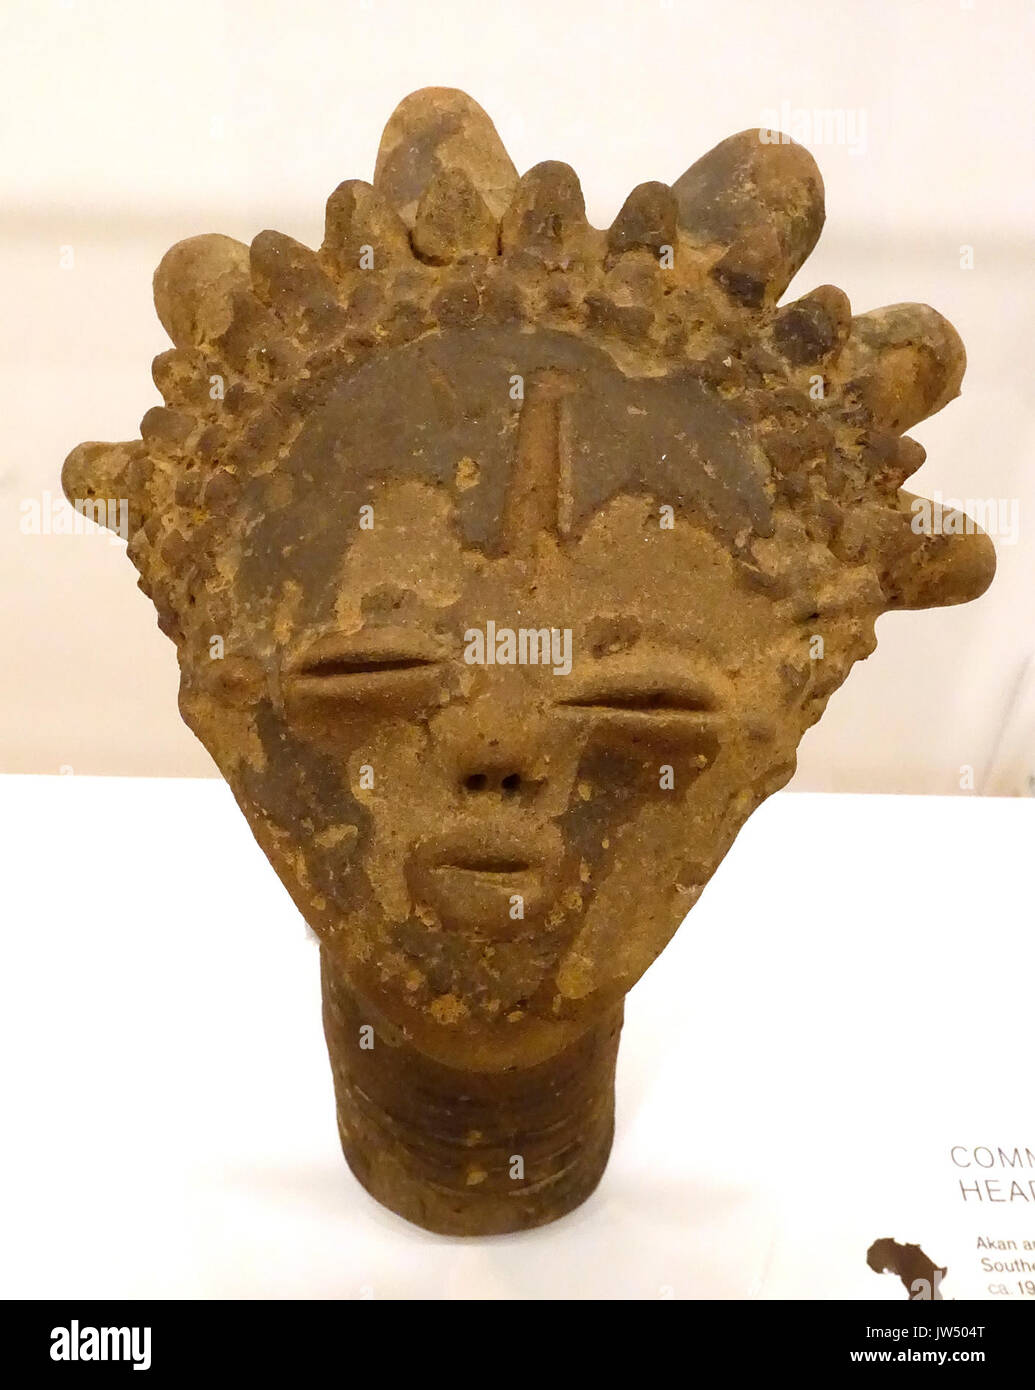 Commemorative head, Akan people, Southern Ghana, c  19th century, terracotta   Krannert Art Museum, UIUC   DSC06174 Stock Photo